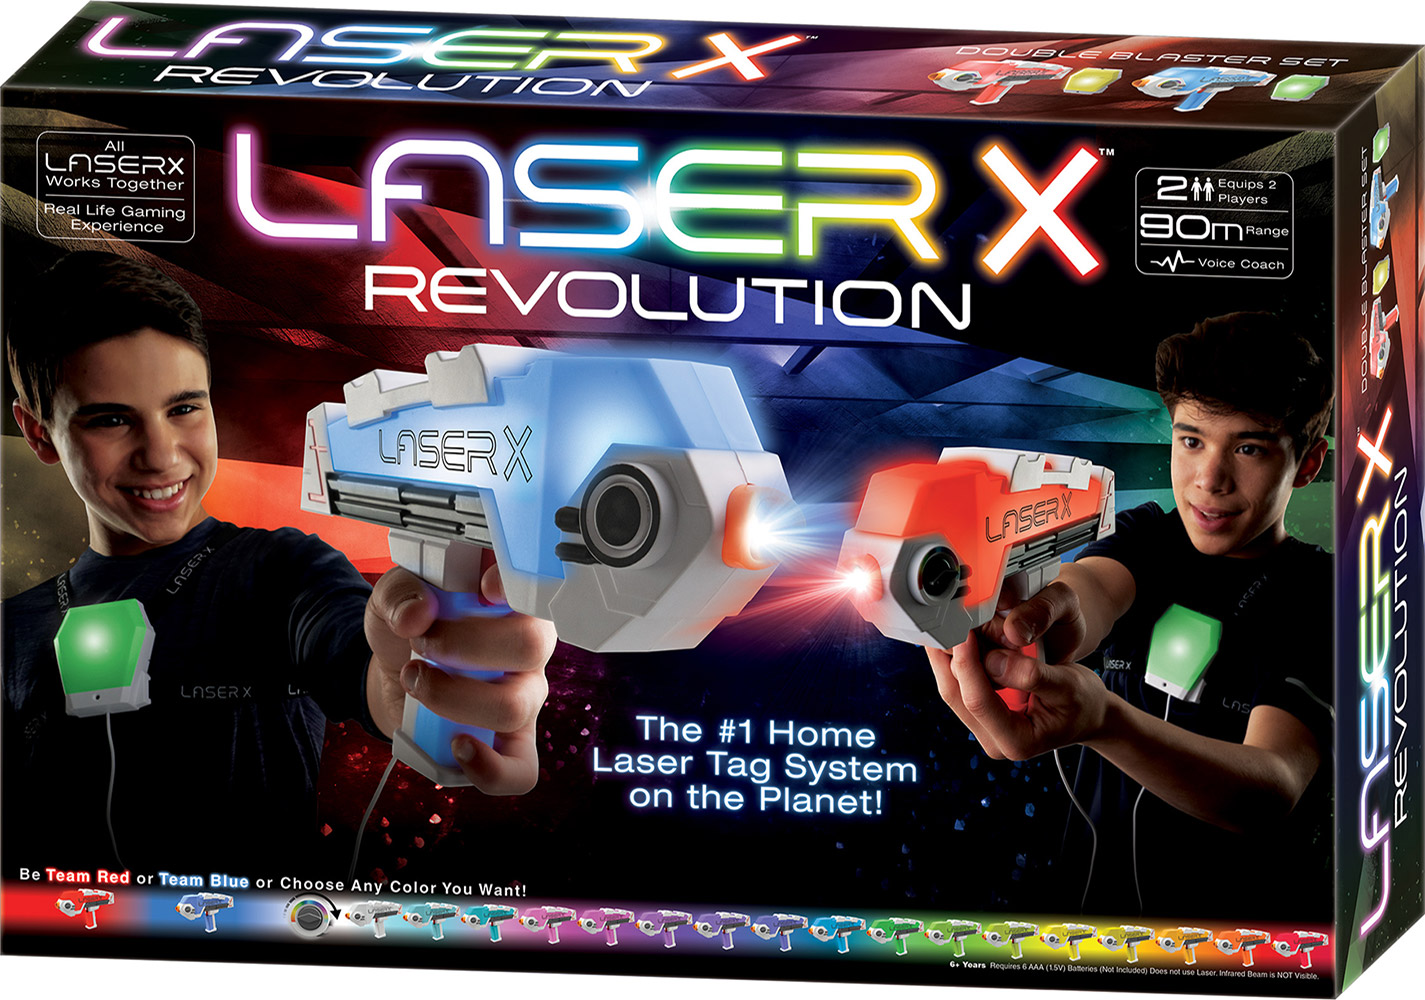 Laser X - Evolution Double Blaster Set